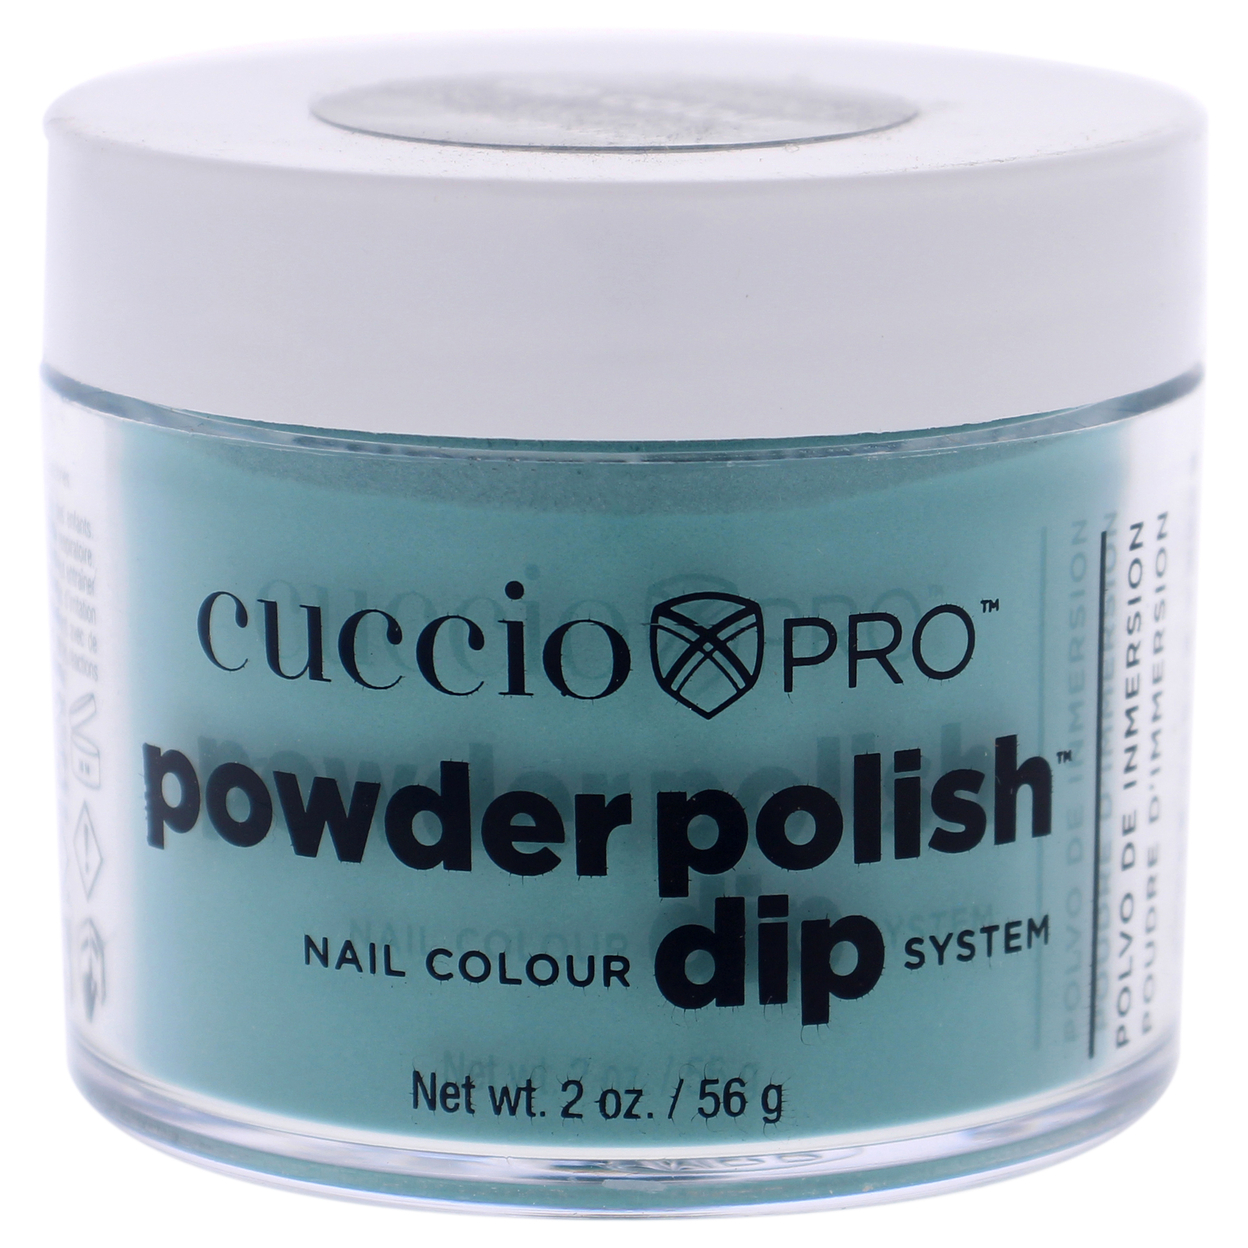 Cuccio Colour Pro Powder Polish Nail Colour Dip System - Jade Green Nail Powder 1.6 Oz